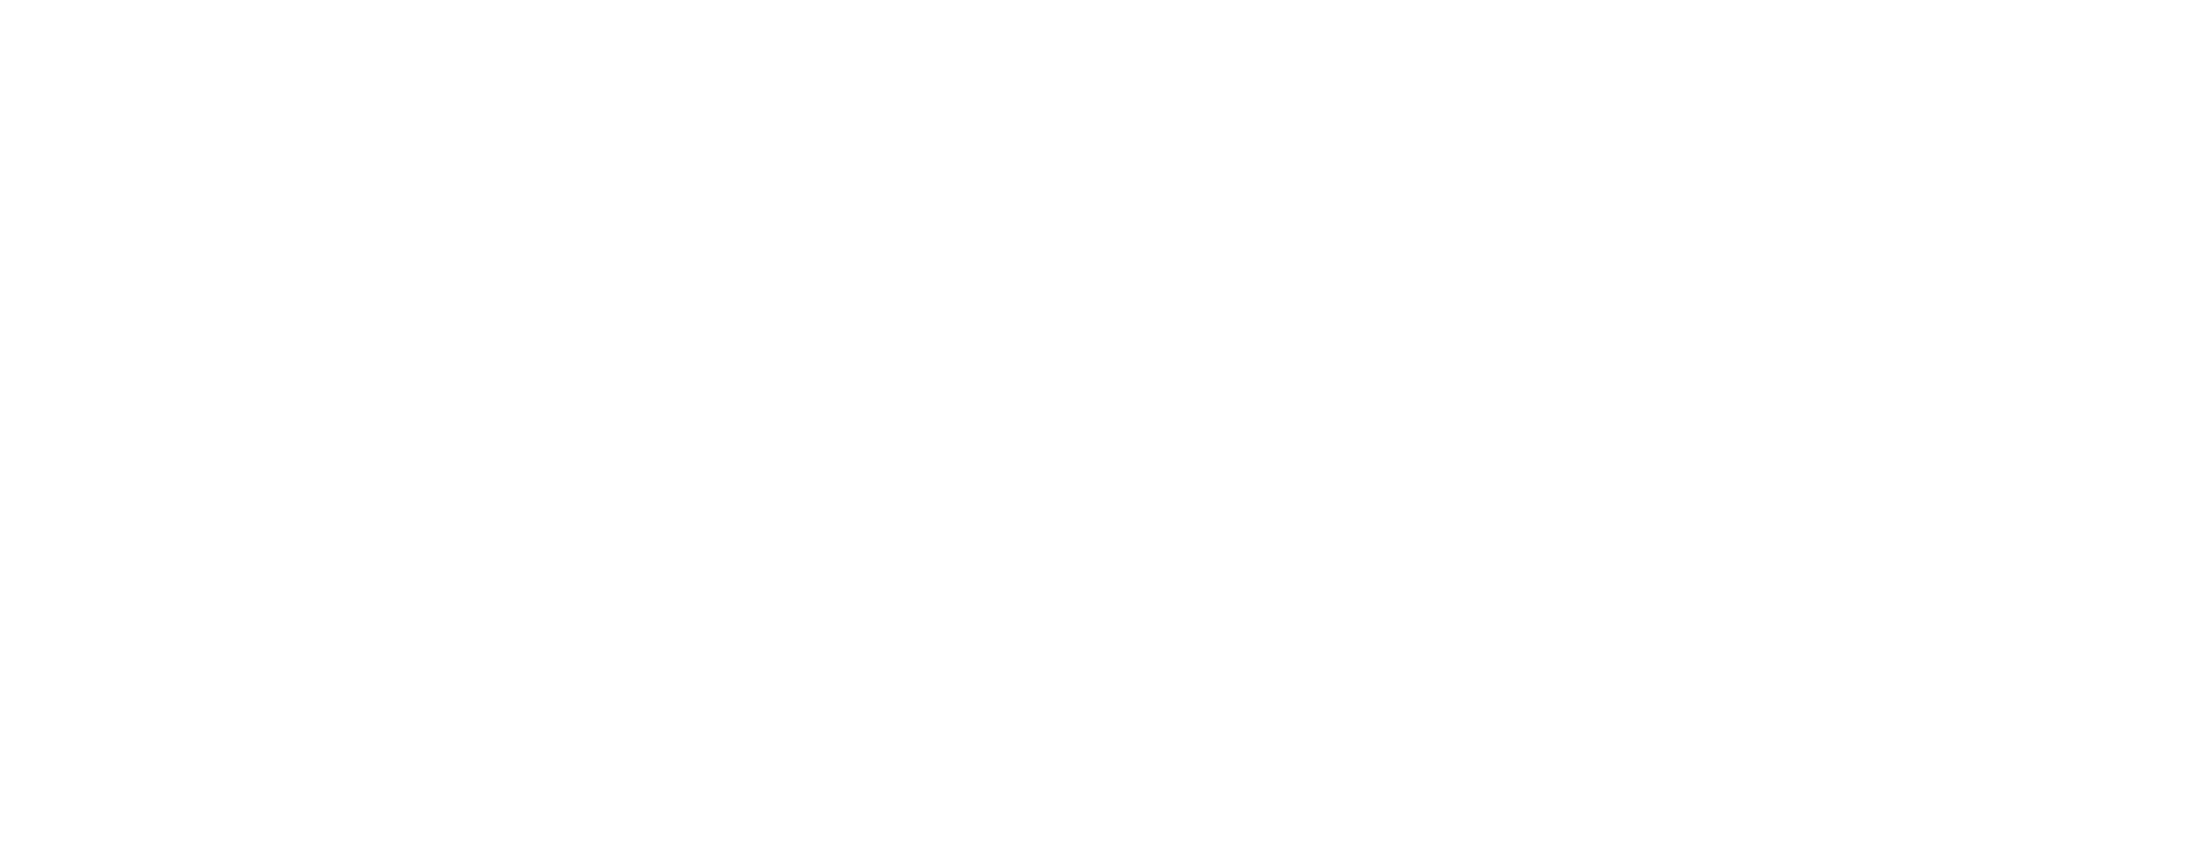 Logo SpoonFood